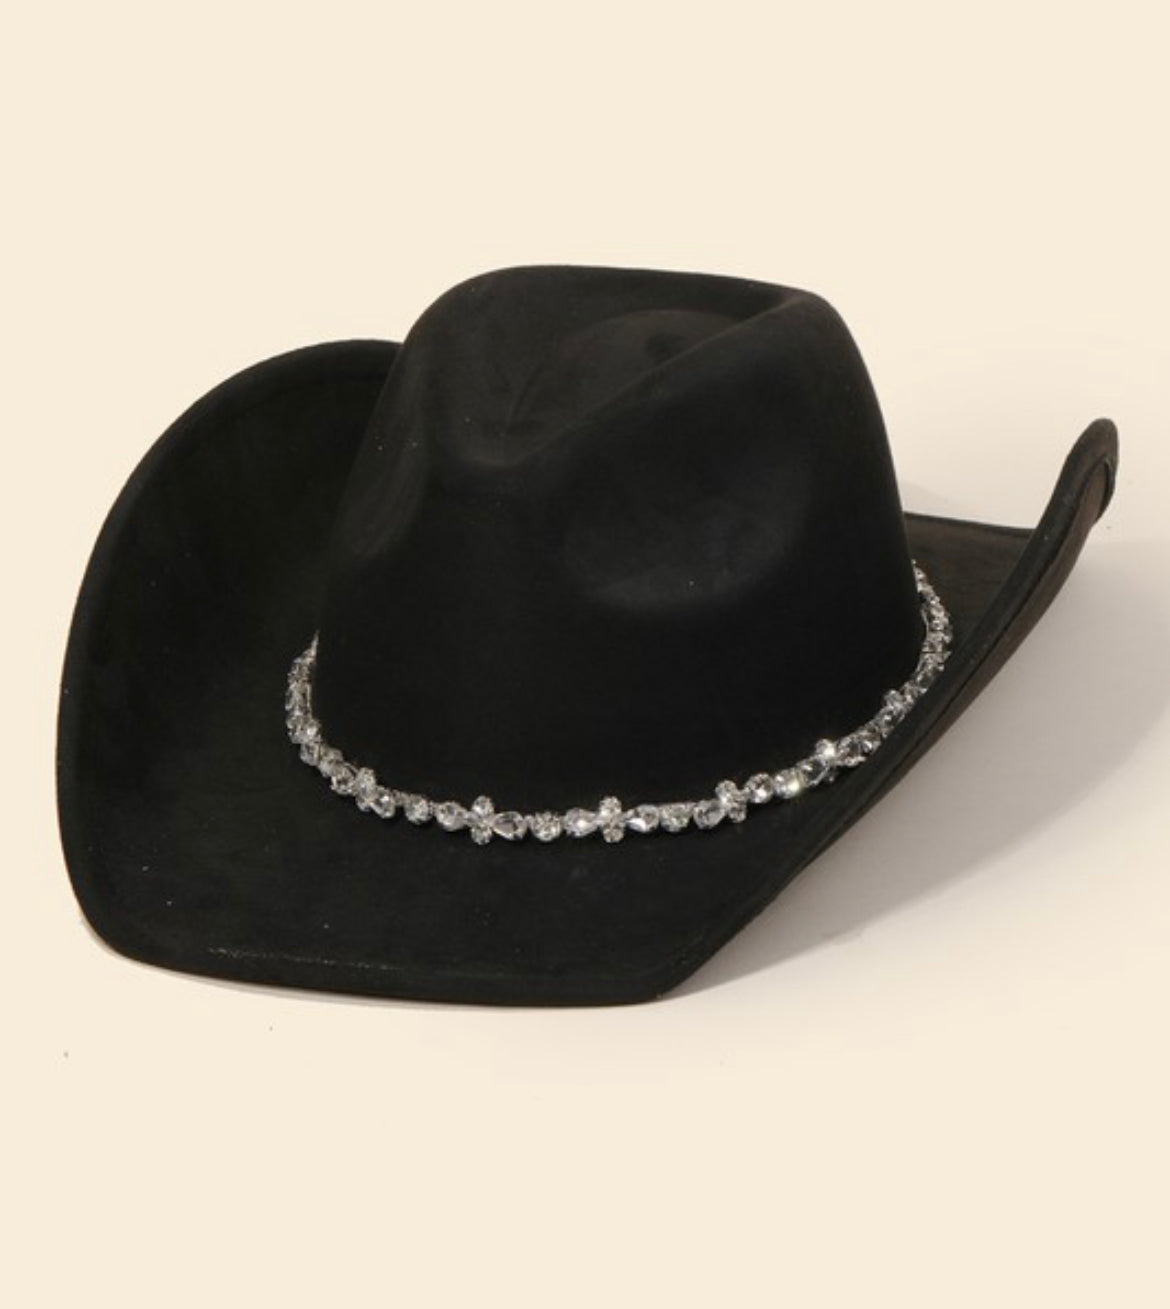 Rhinestone Studded Hat in Black